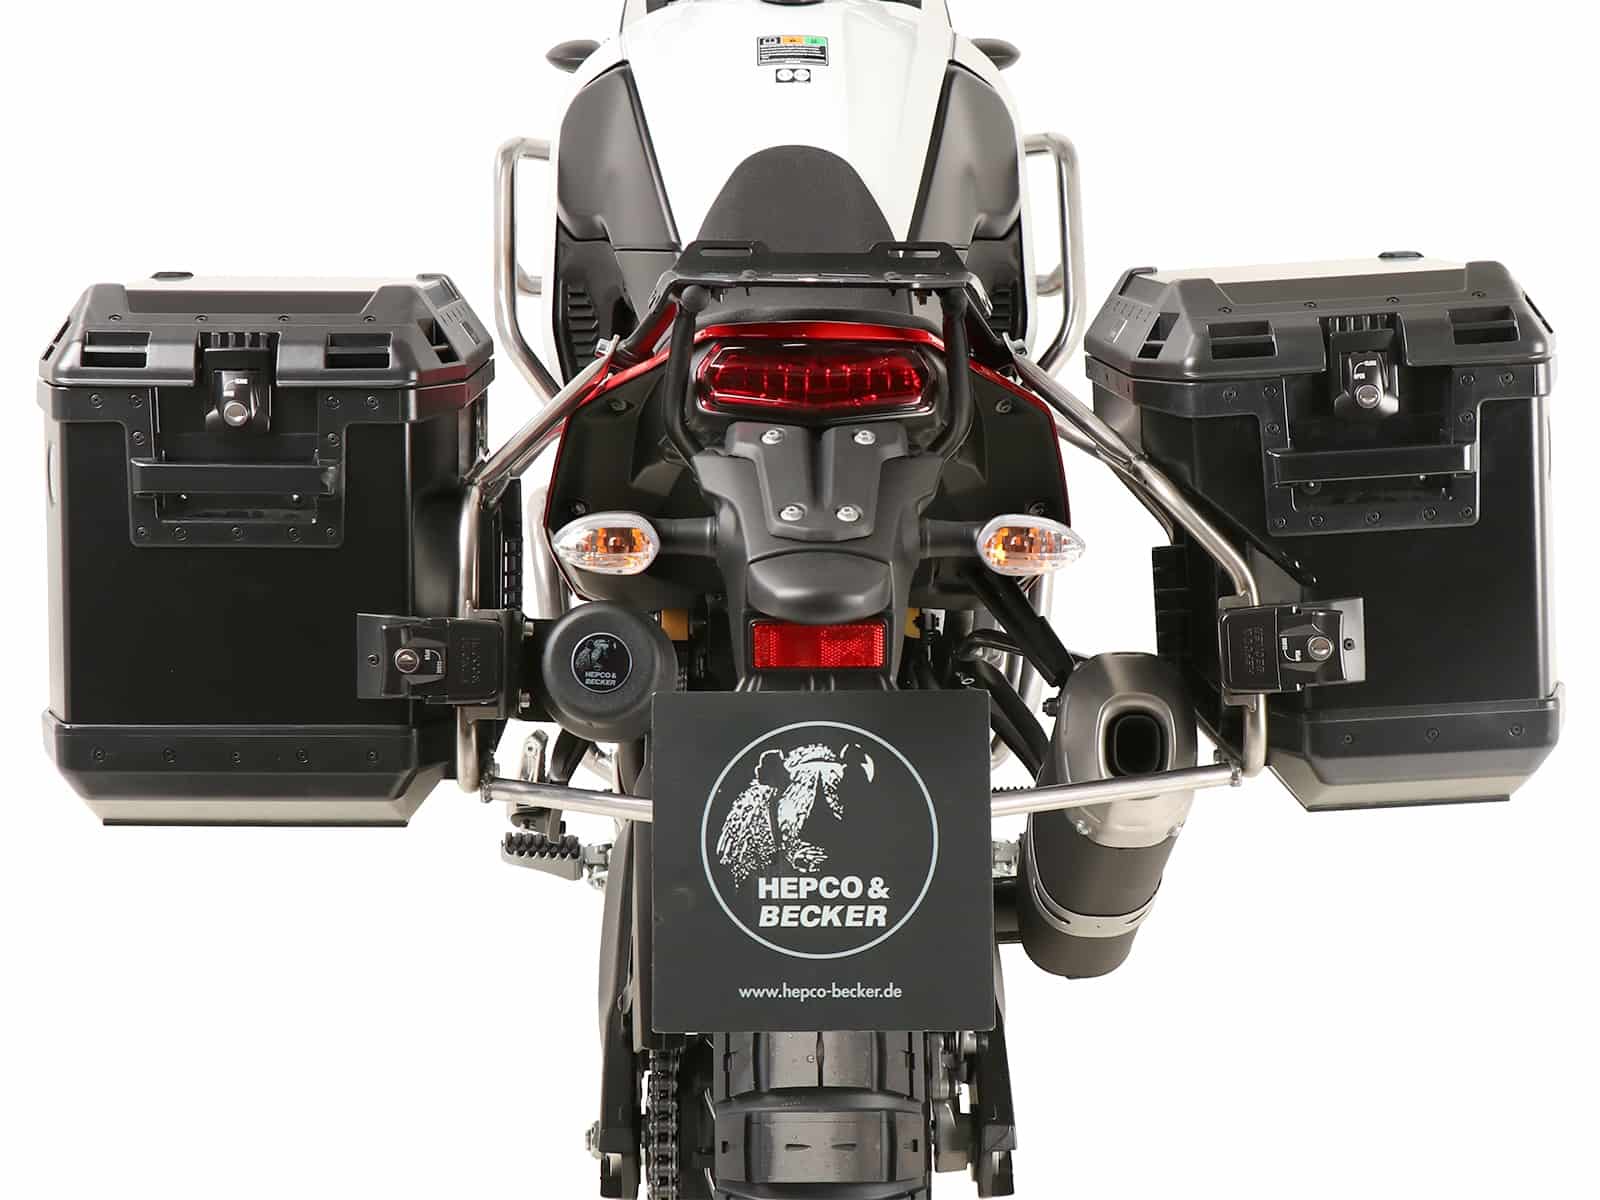 Sidecarrier Cutout black incl. Xplorer Cutout sideboxes for Yamaha Ténéré 700 / Rally (2019-)